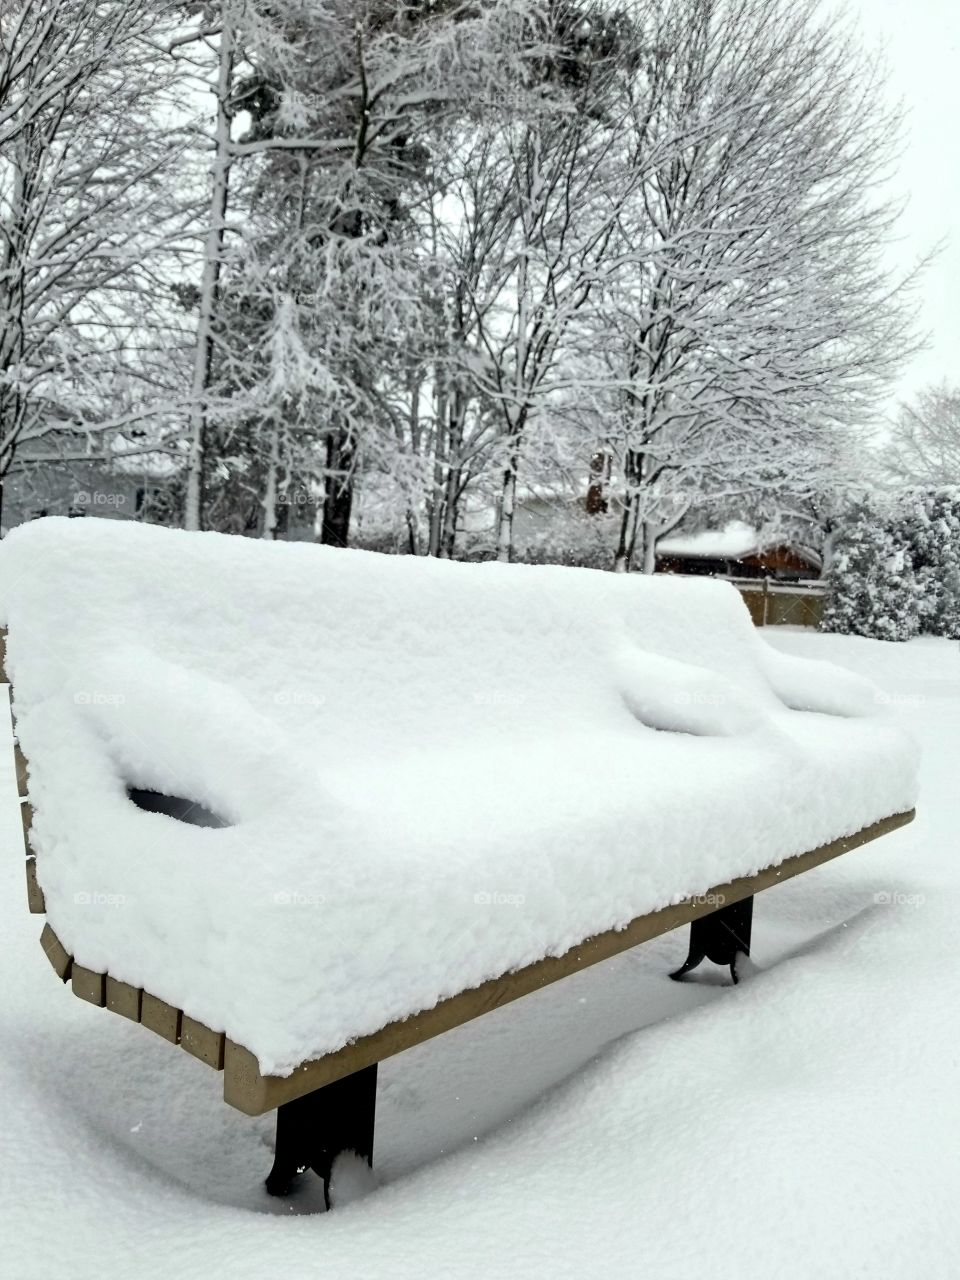 Park bench after a snowfall